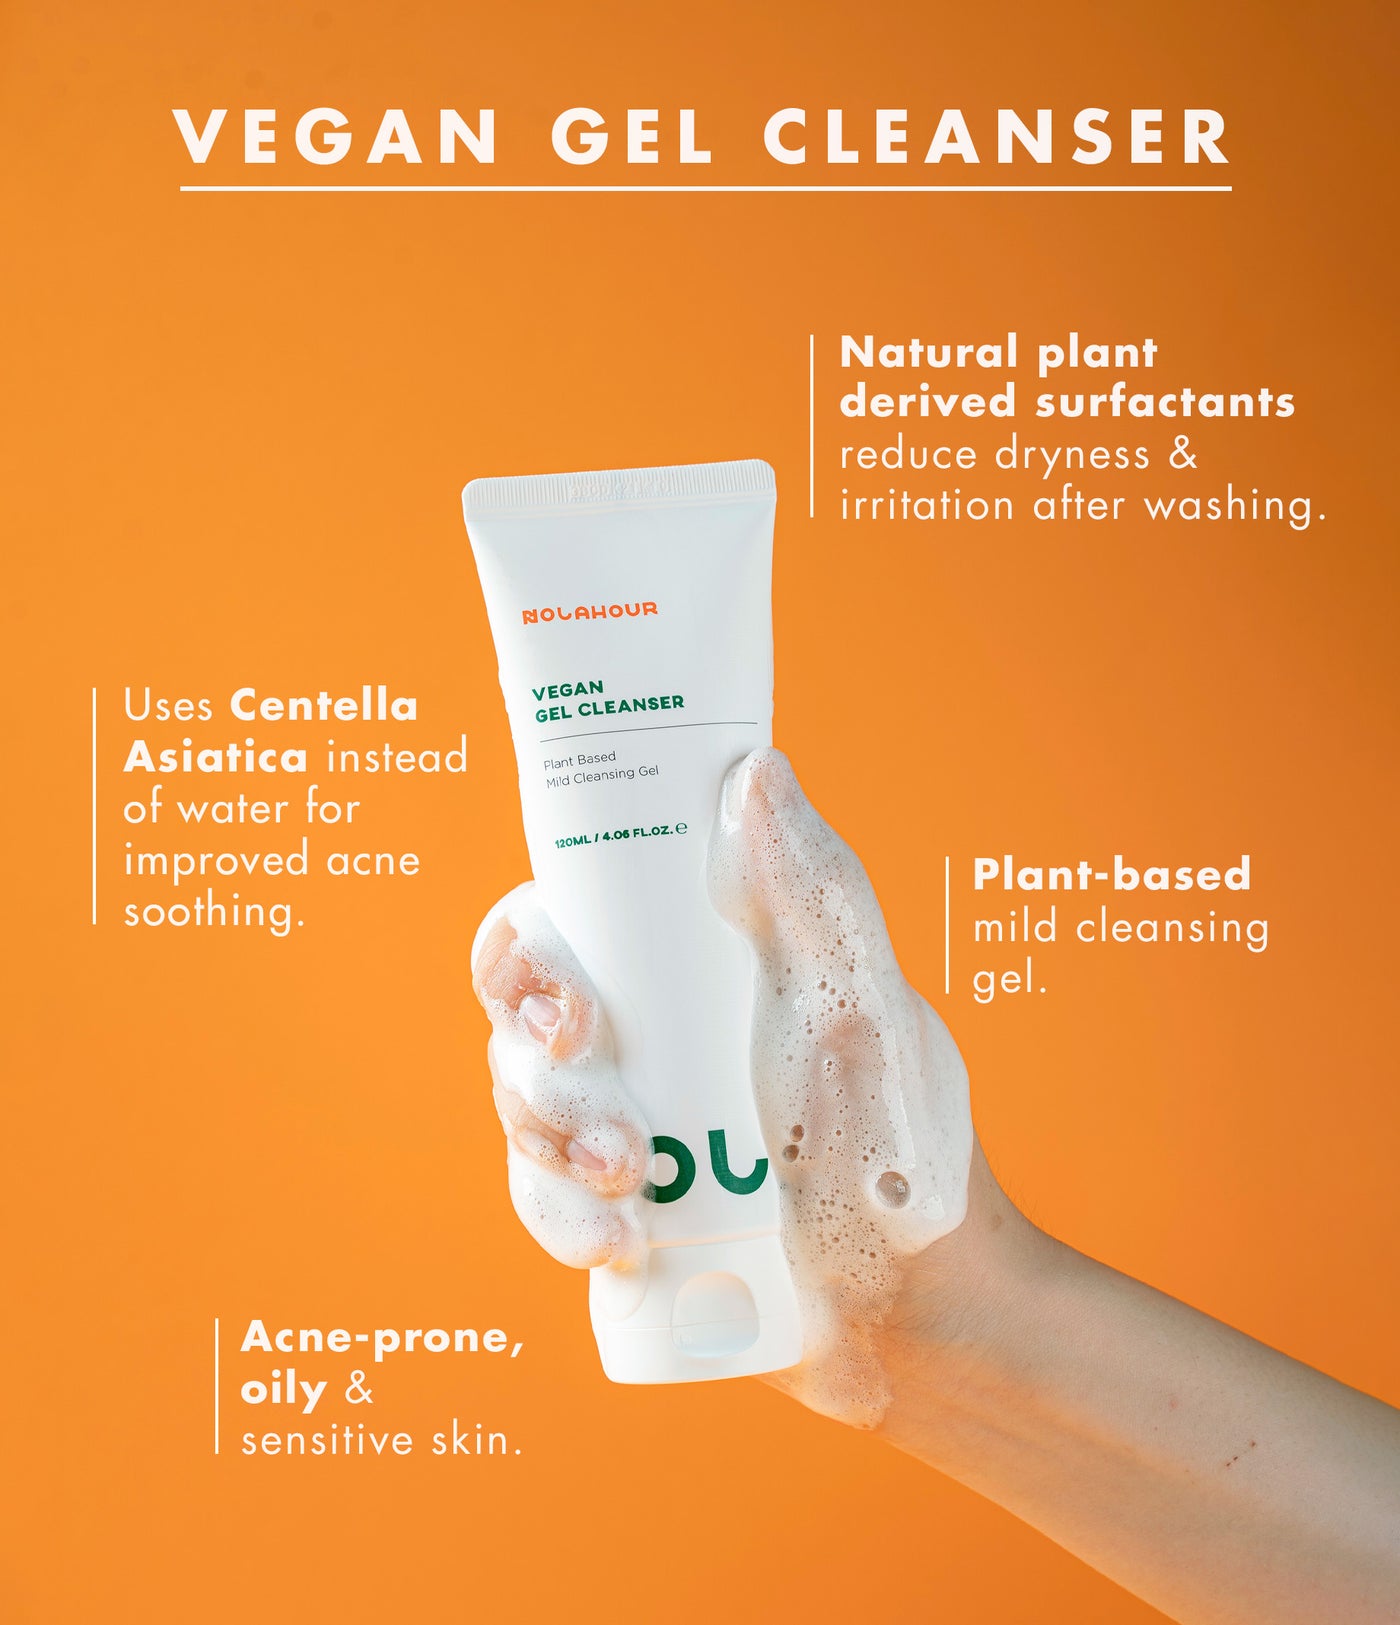 Nolahour Vegan Gel Cleanser